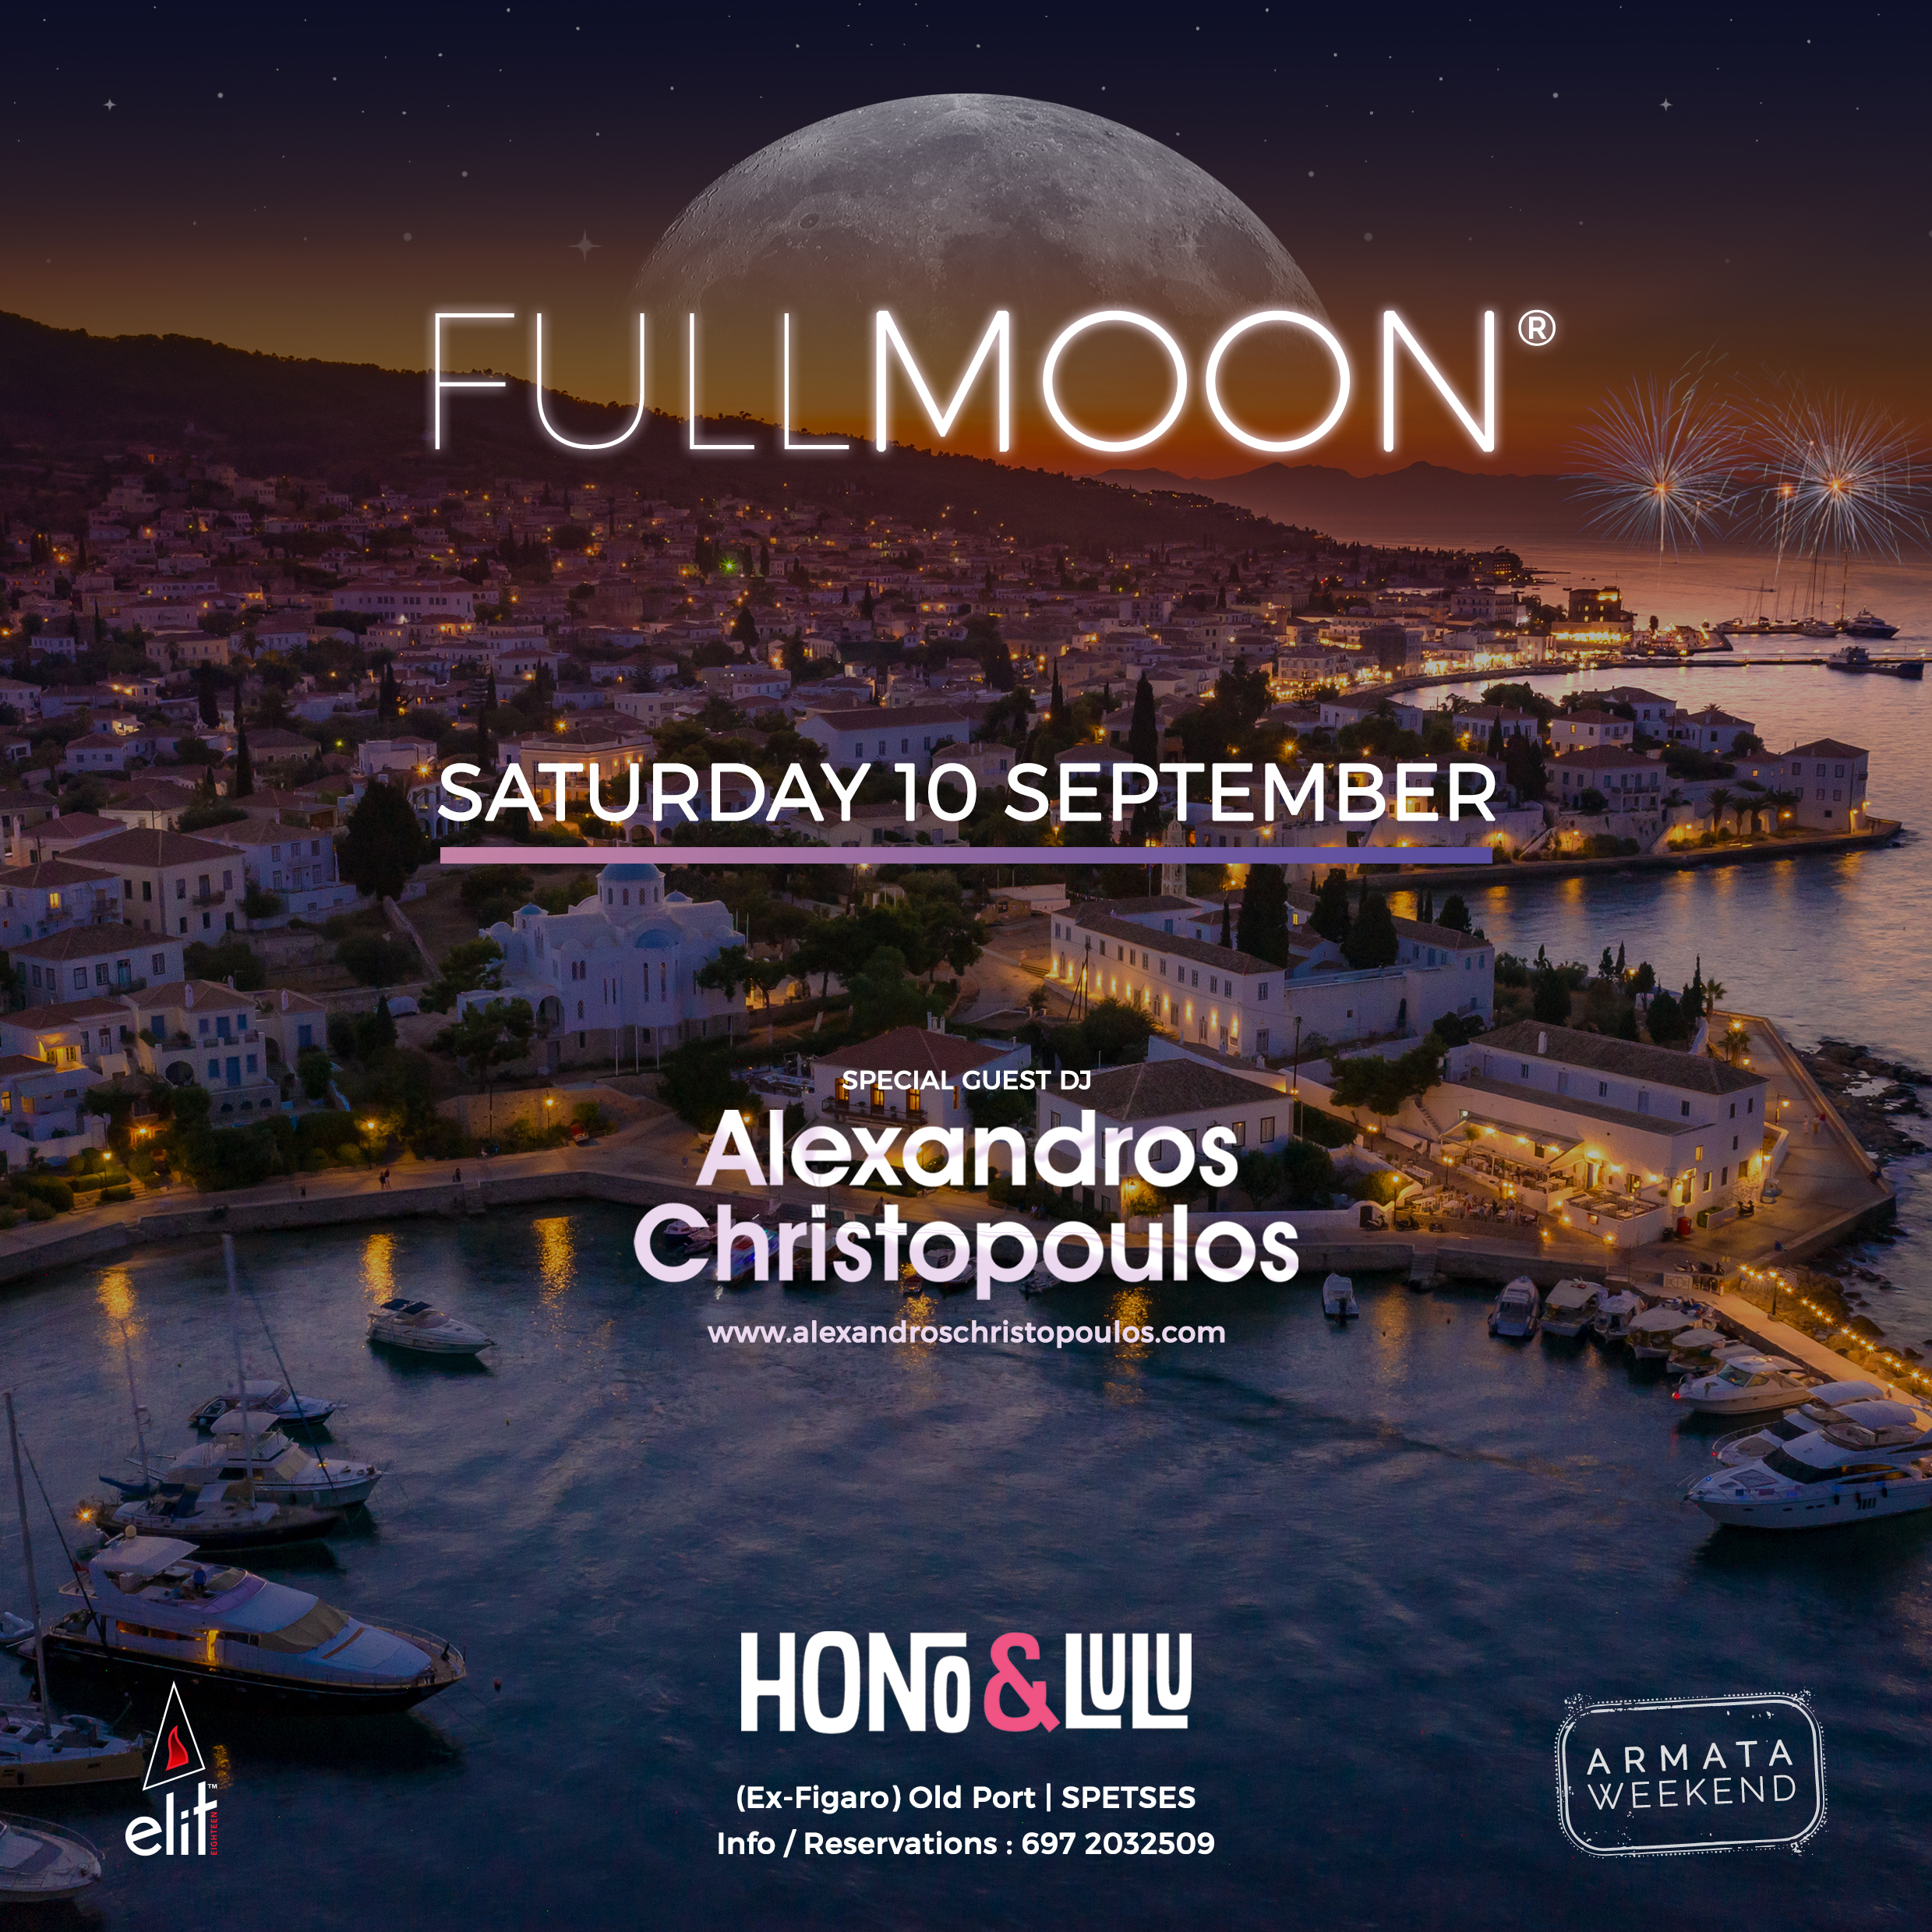 Full Moon® Hono&Lulu (Spetses) Armata Weekend